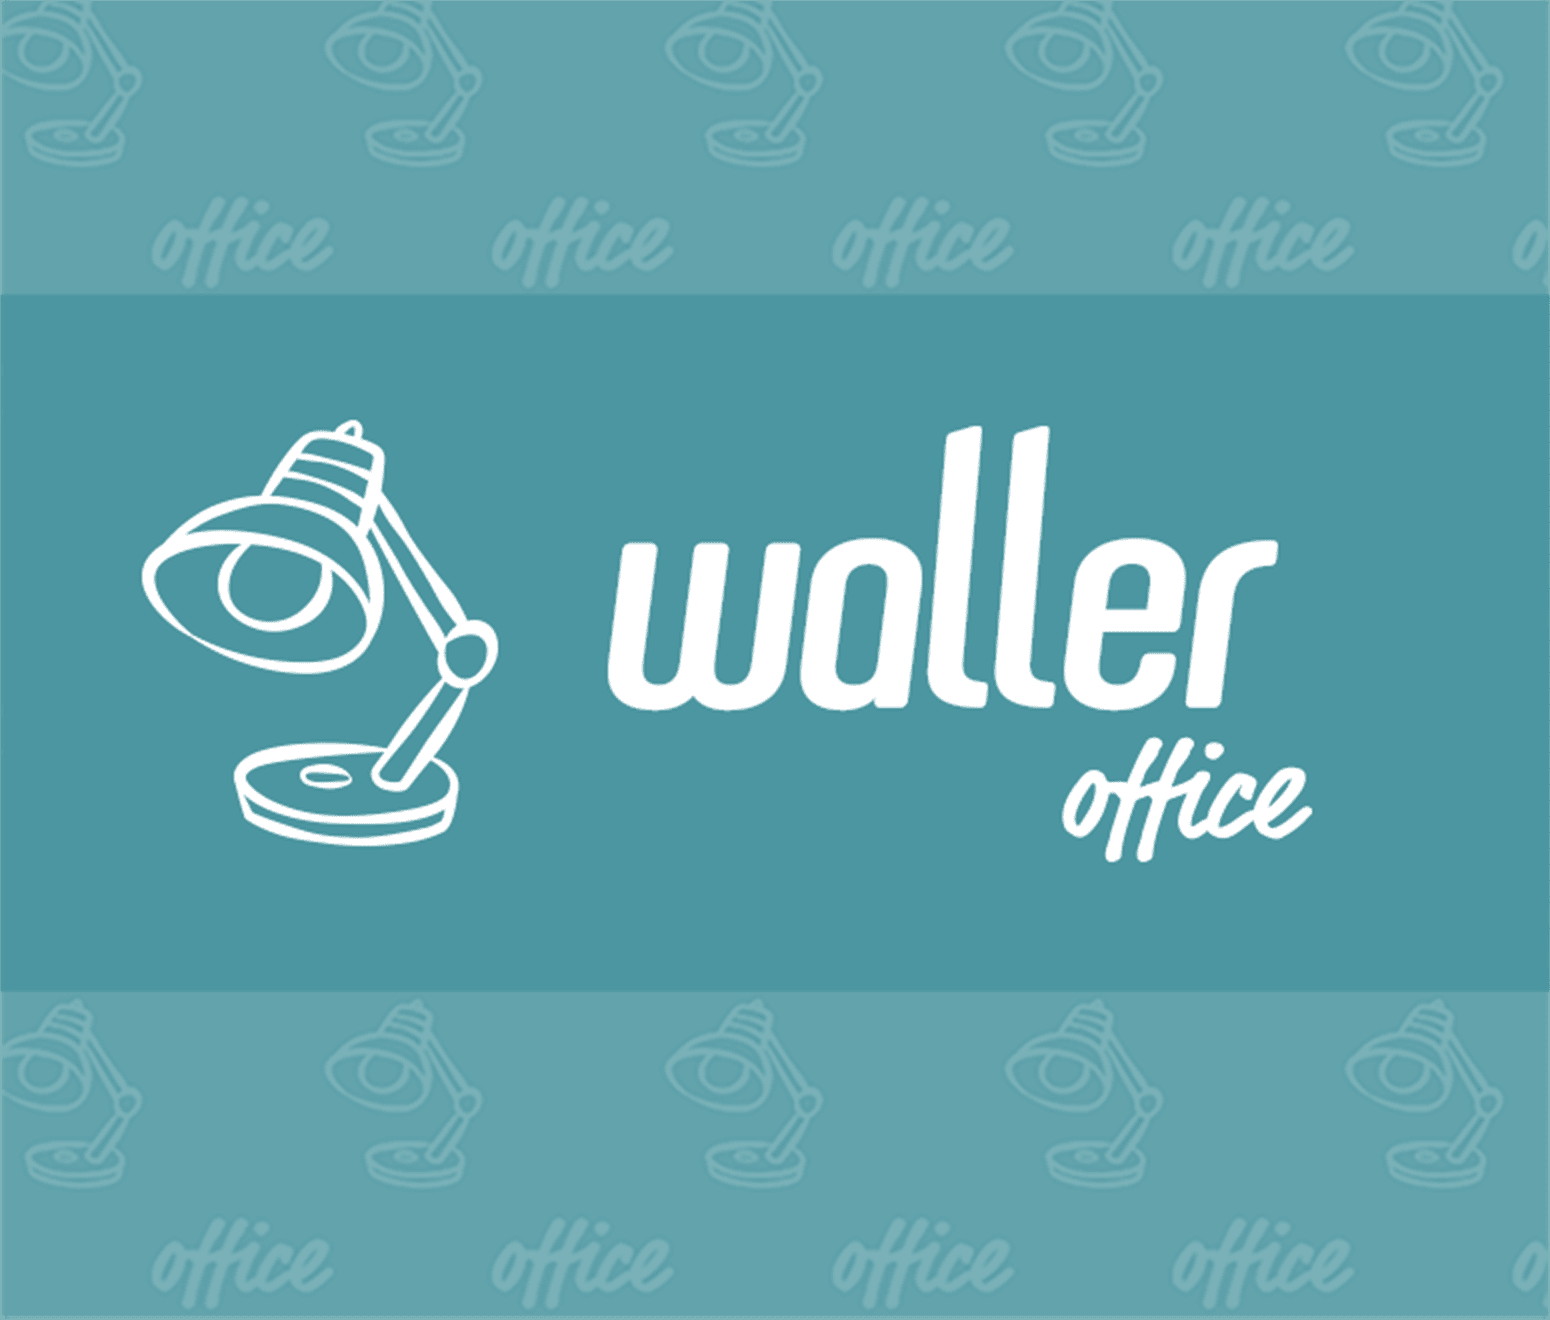 Waller Office